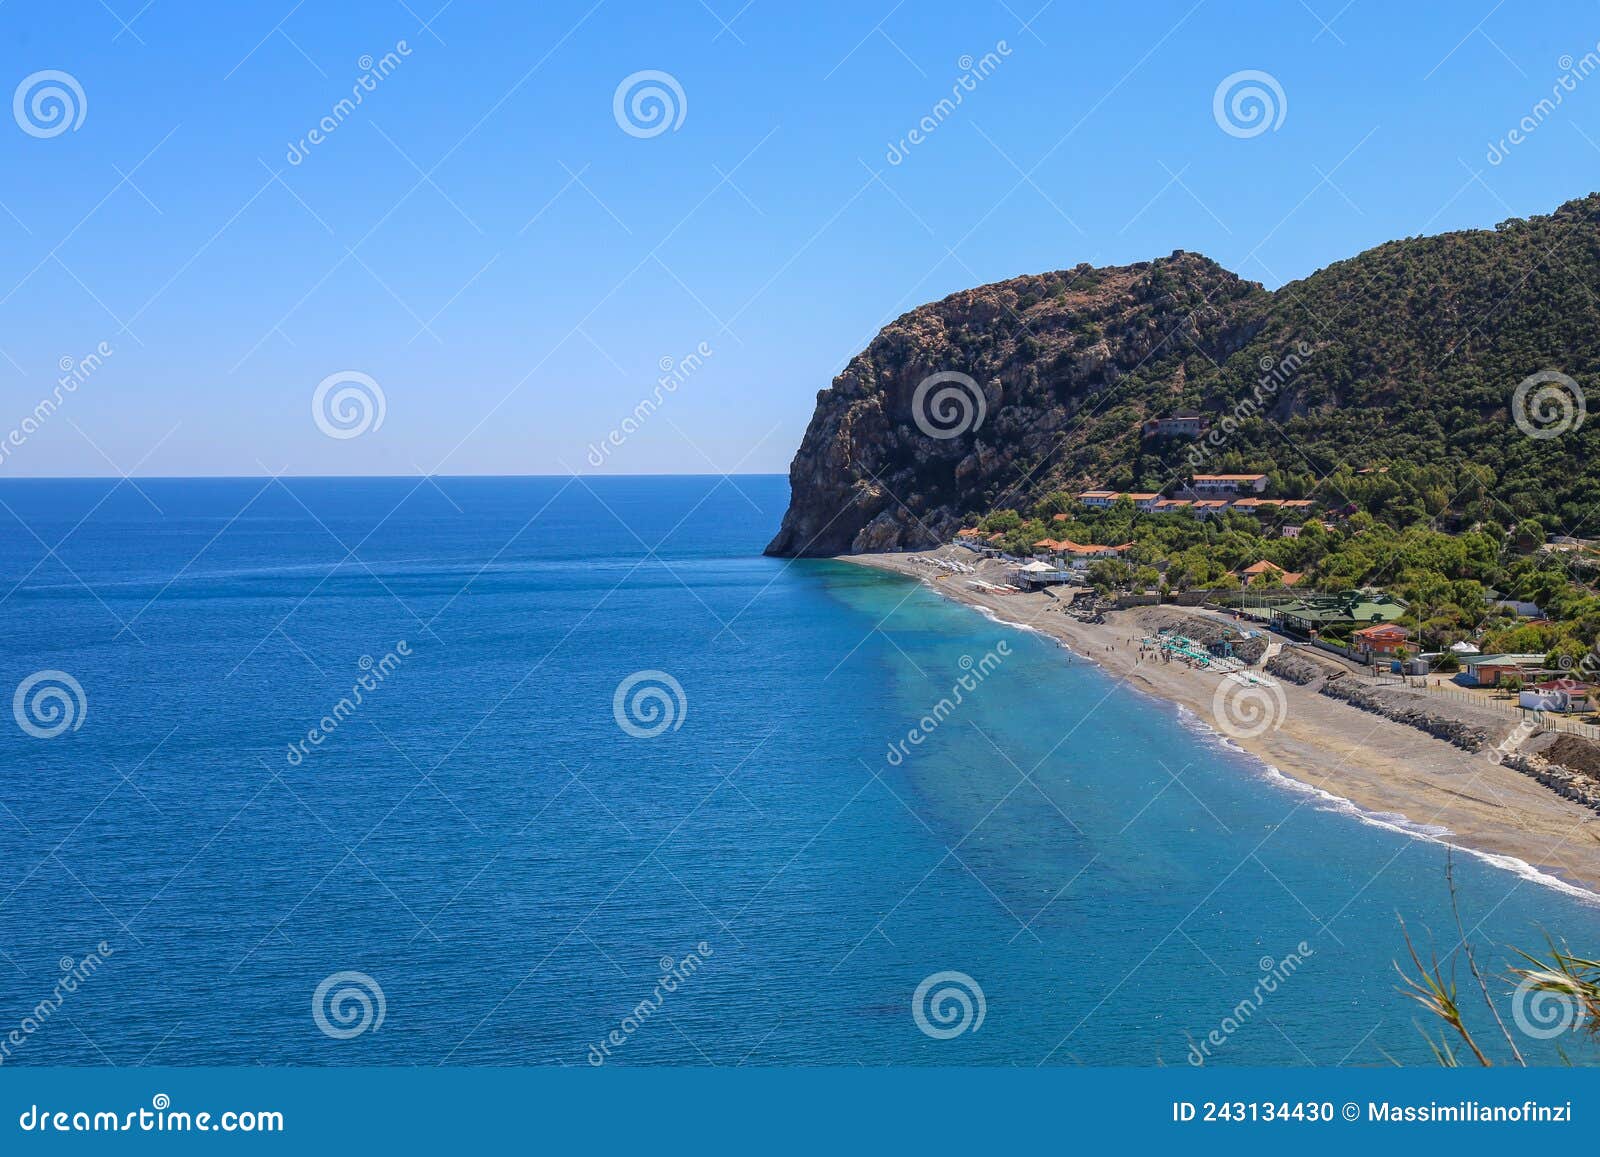 view of the coastline in the province of gioiosa marea